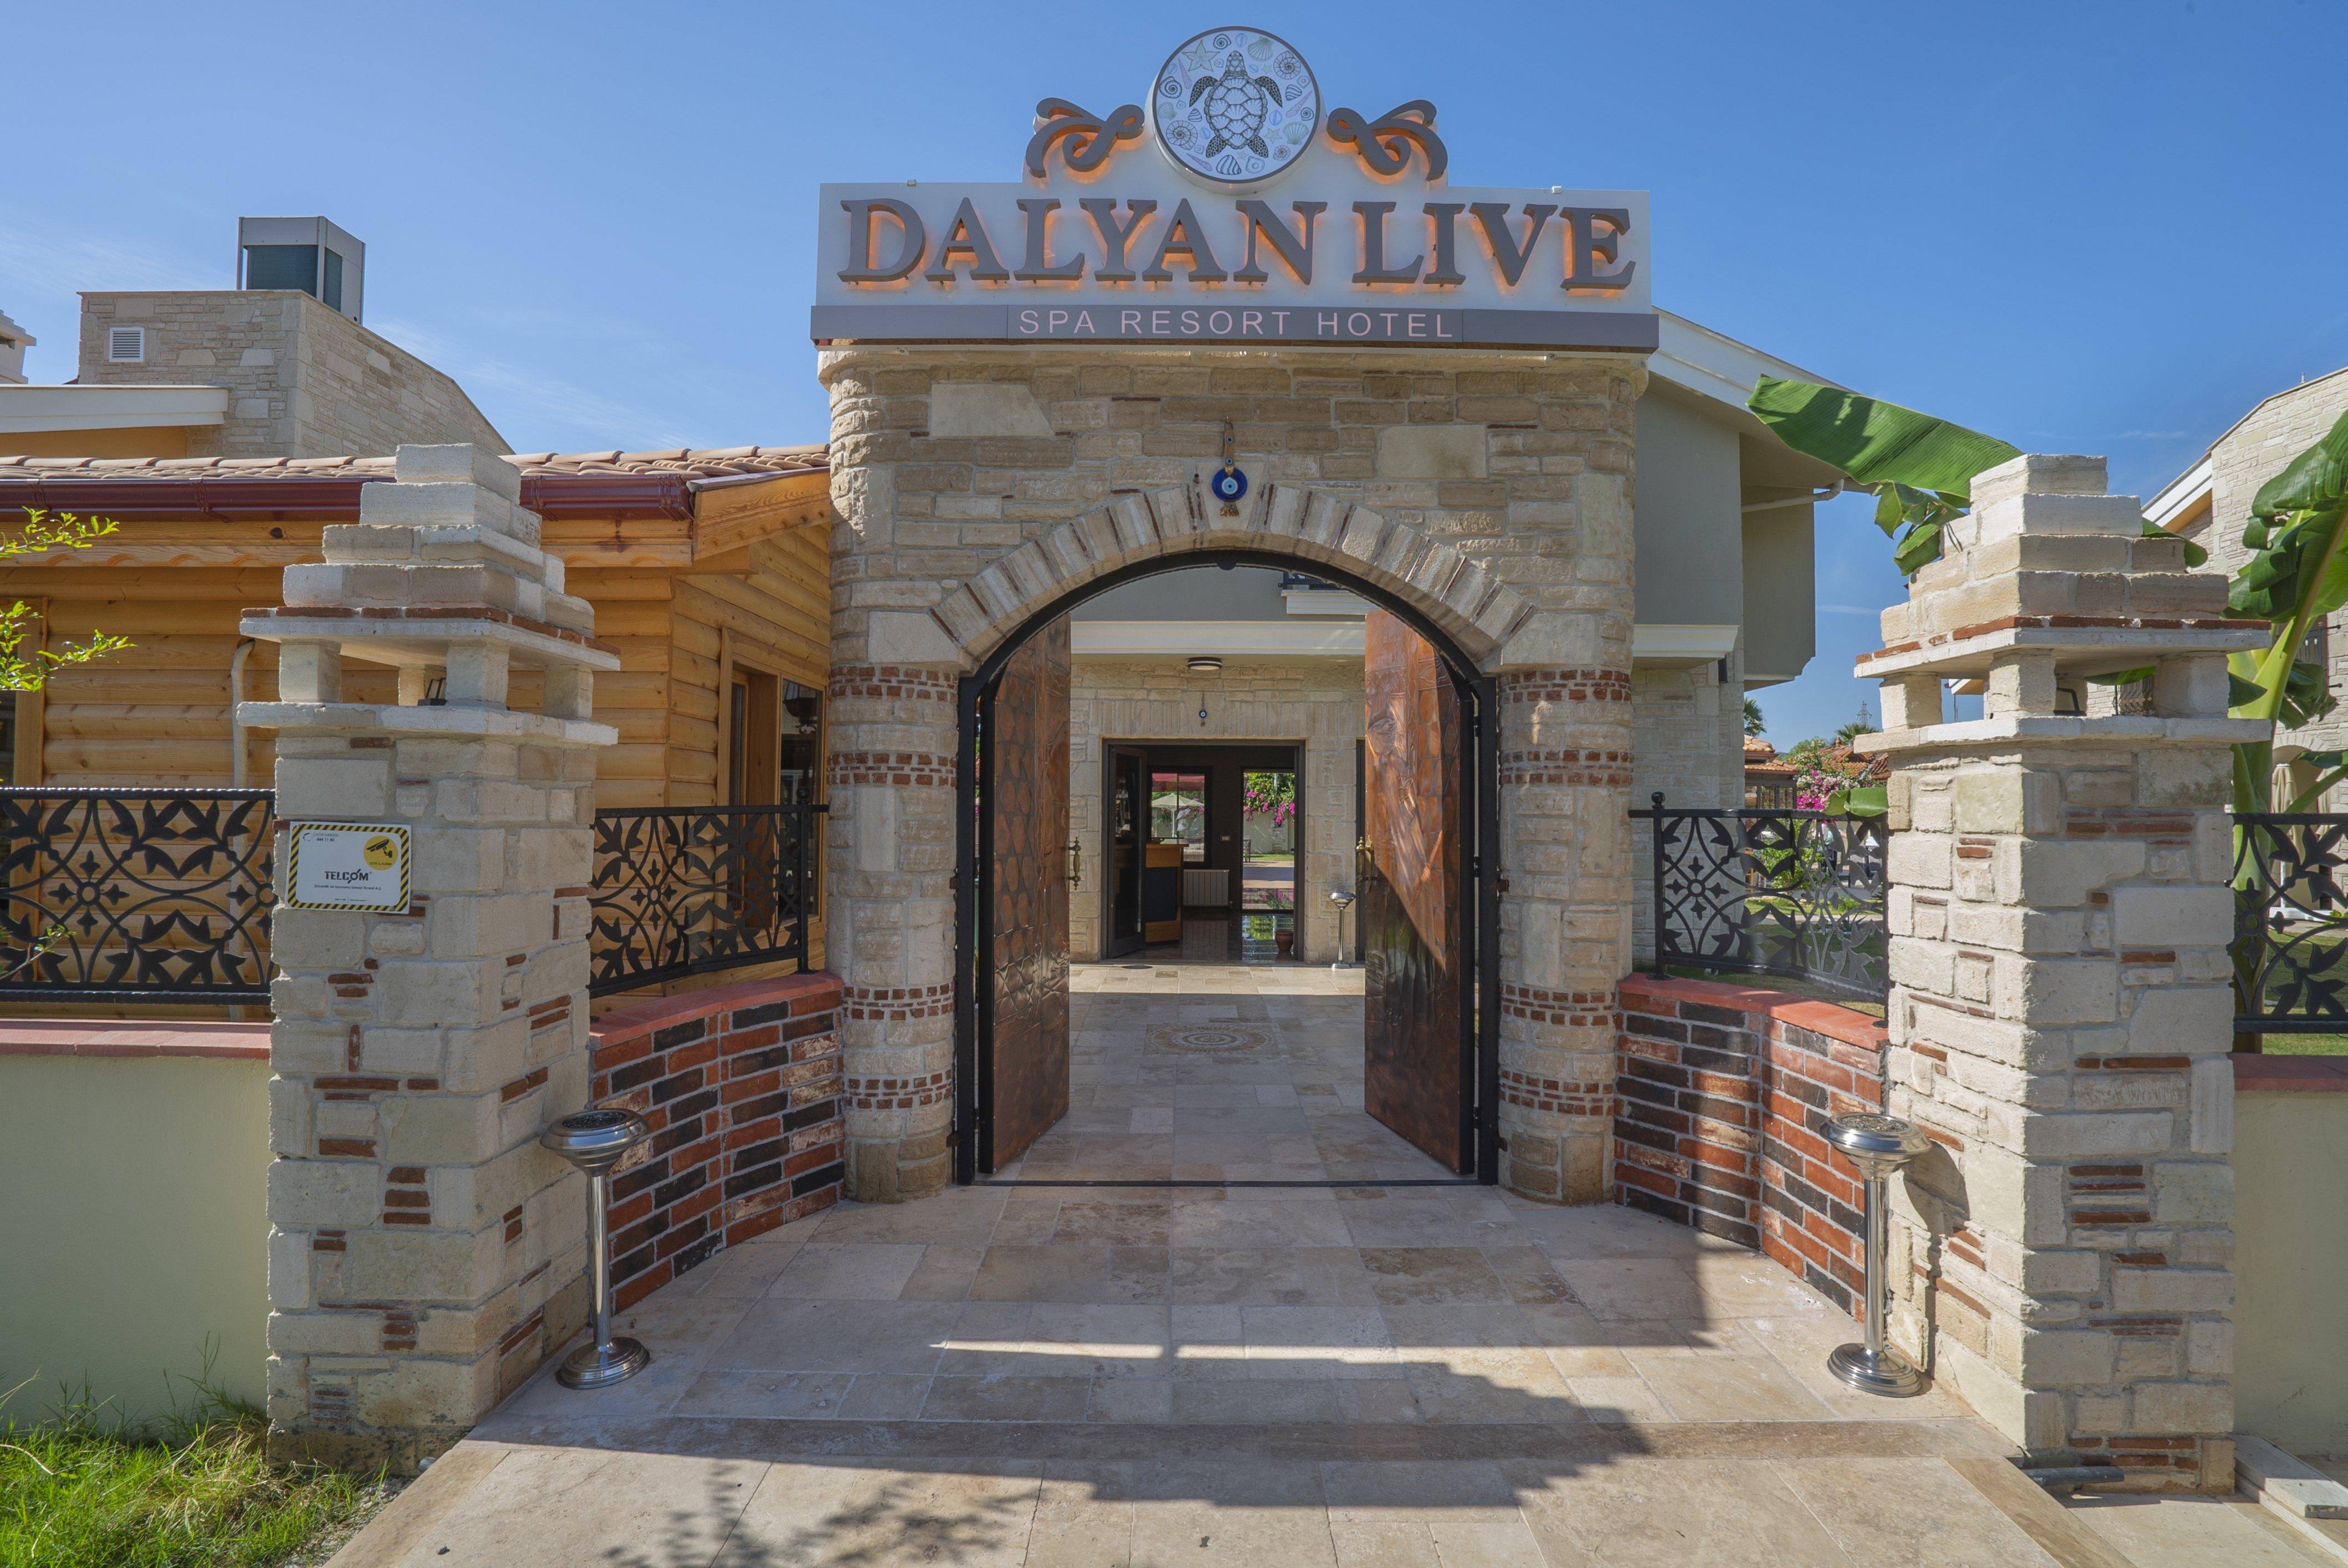 Dalyan Live Spa Hotel